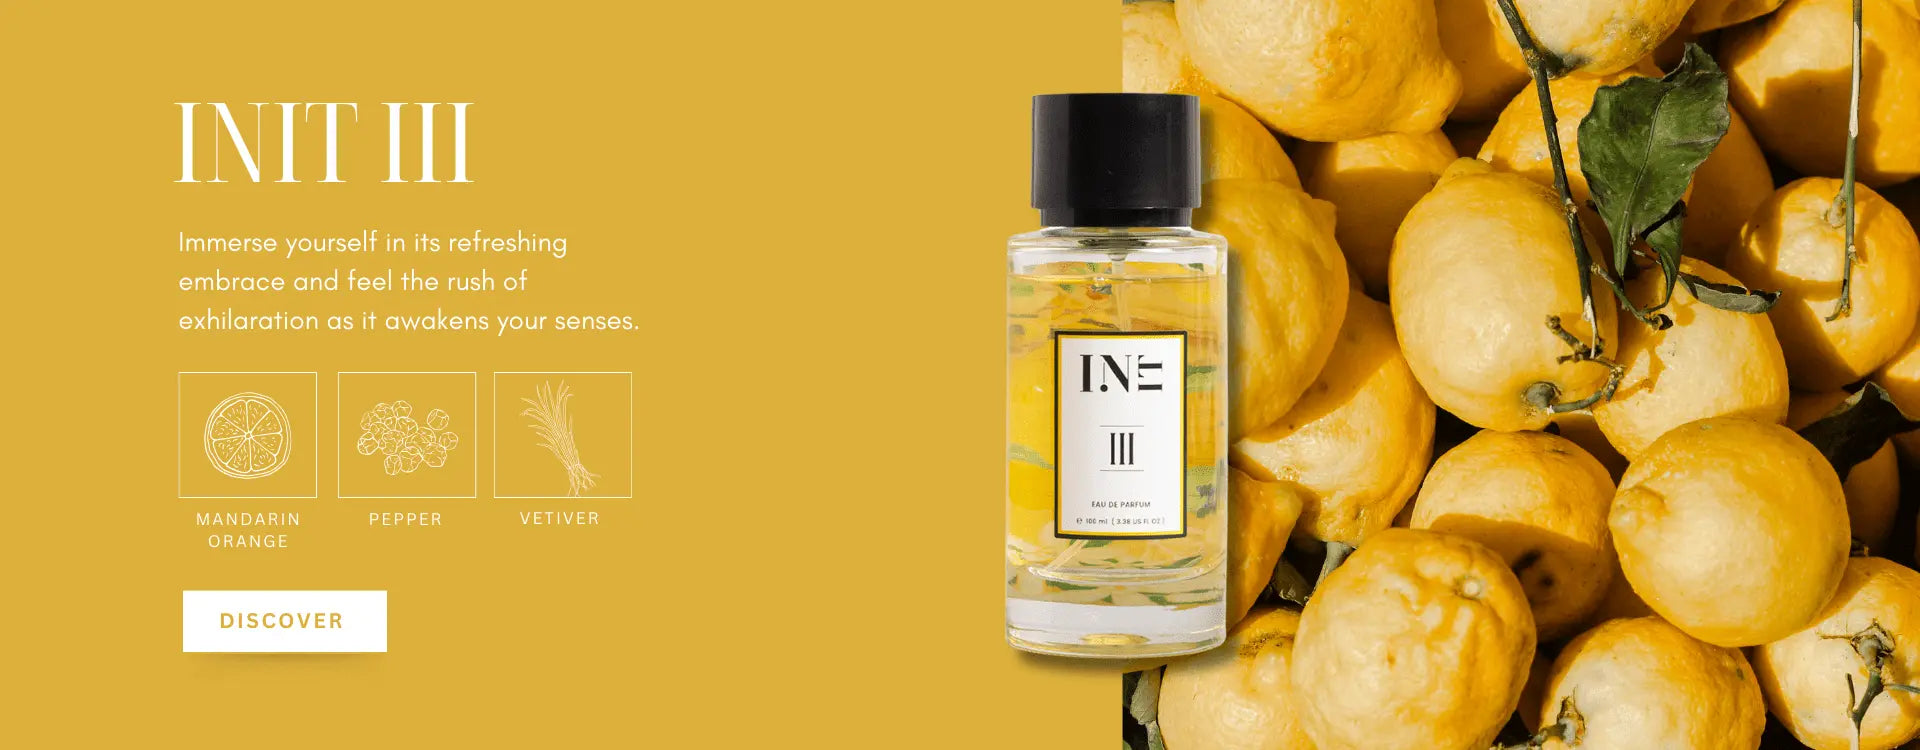 INIT No.III - Active Citrus Perfume